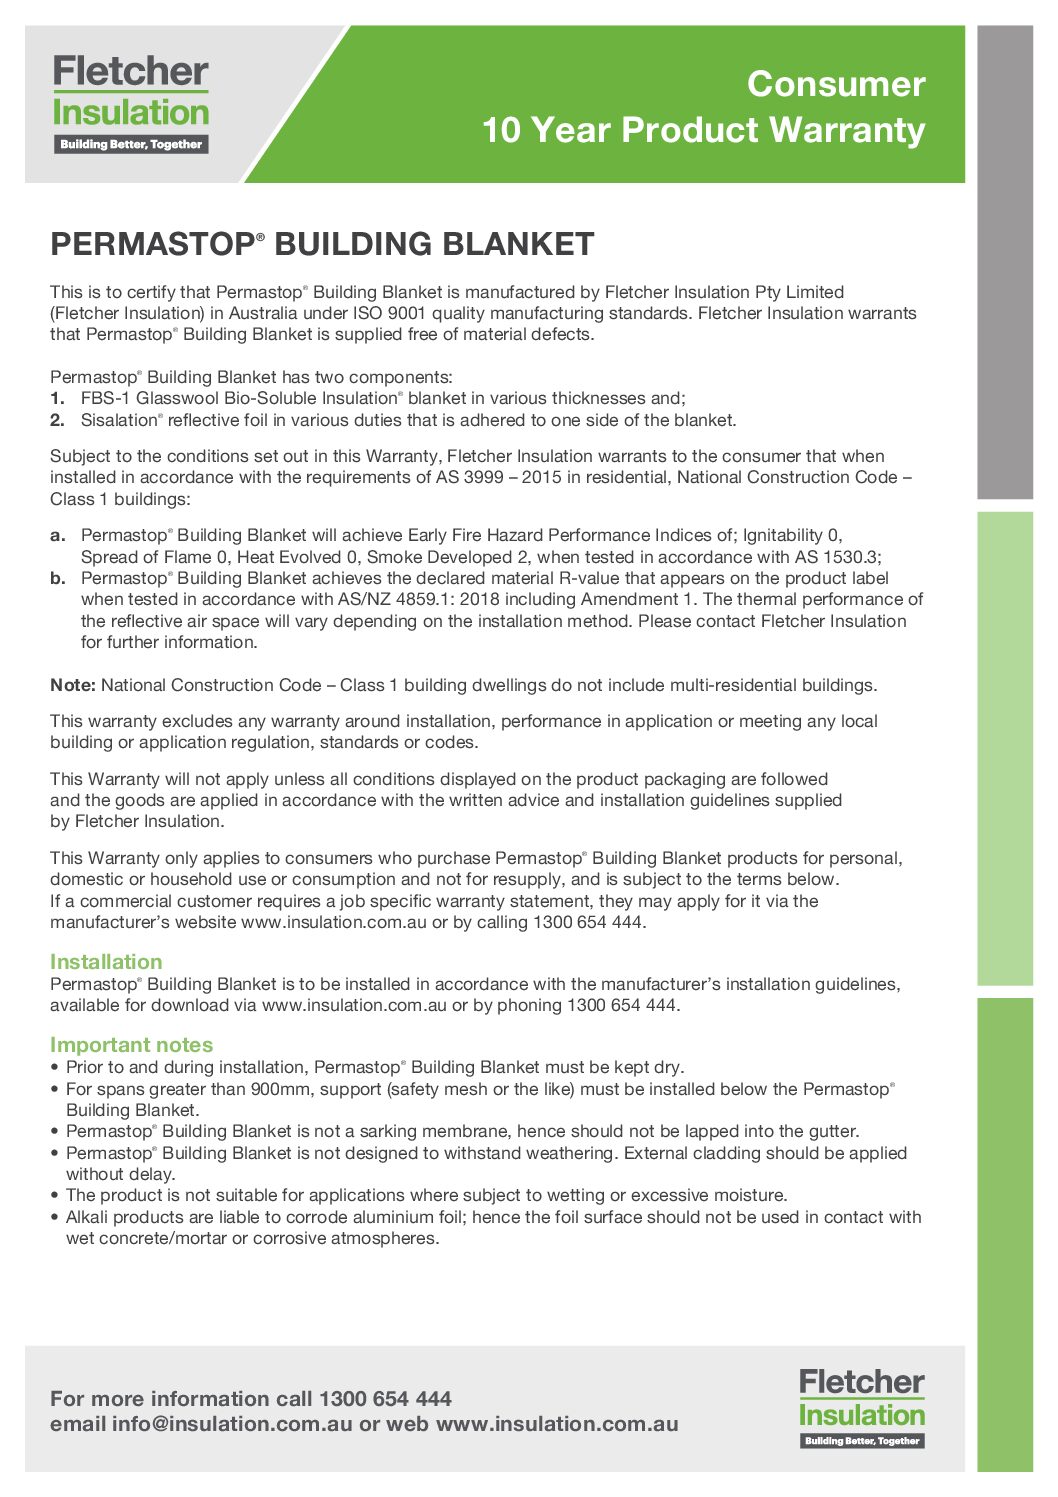 Permastop® Building Blanket Consumer Warranty